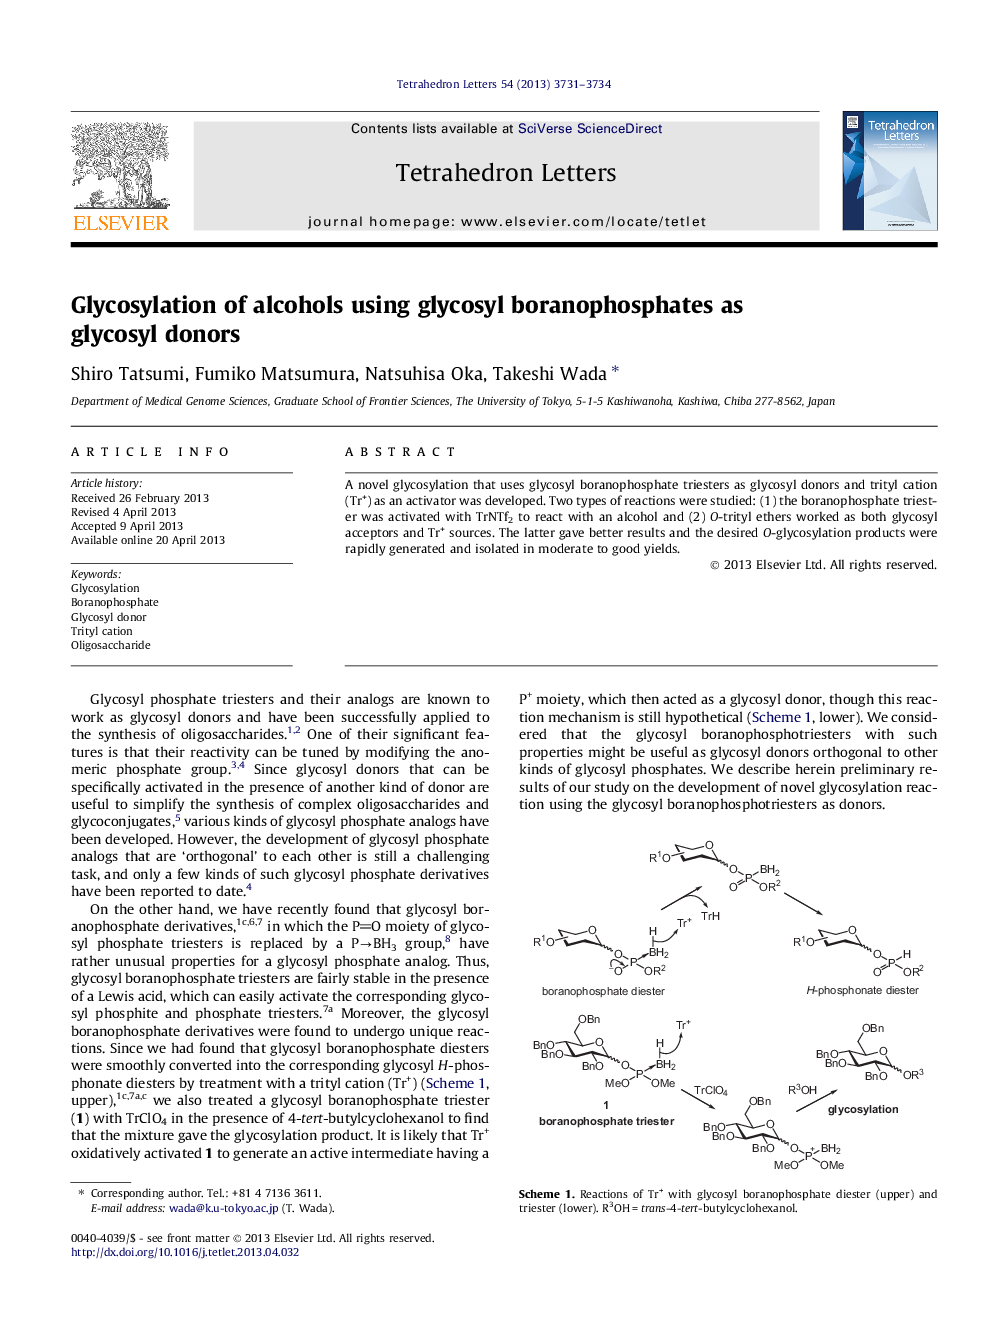 Glycosylation of alcohols using glycosyl boranophosphates as glycosyl donors